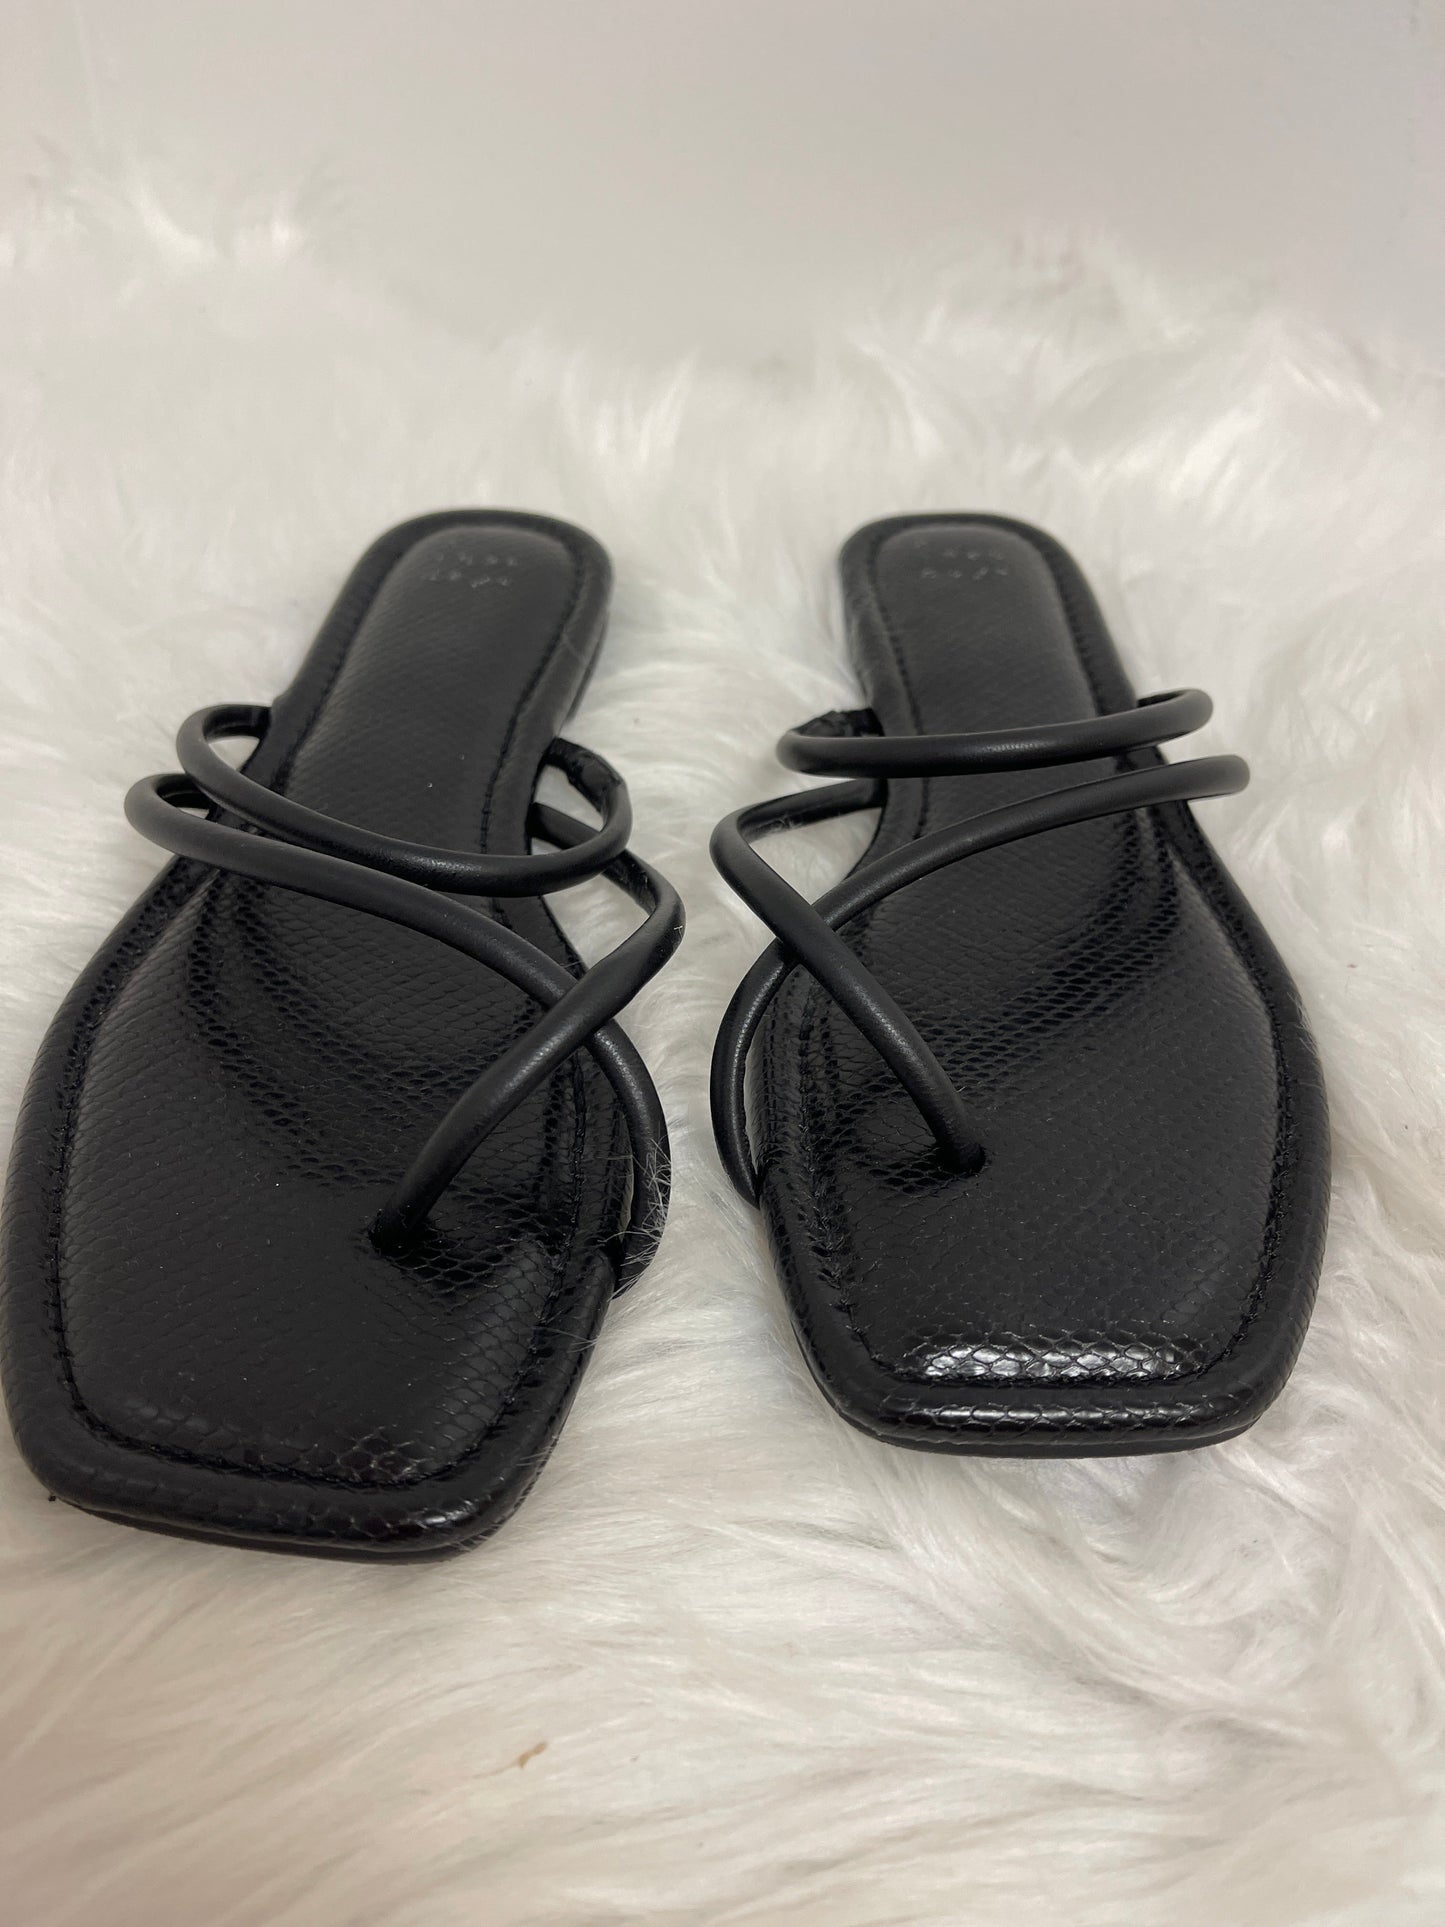 Black Sandals Flats Clothes Mentor, Size 7.5